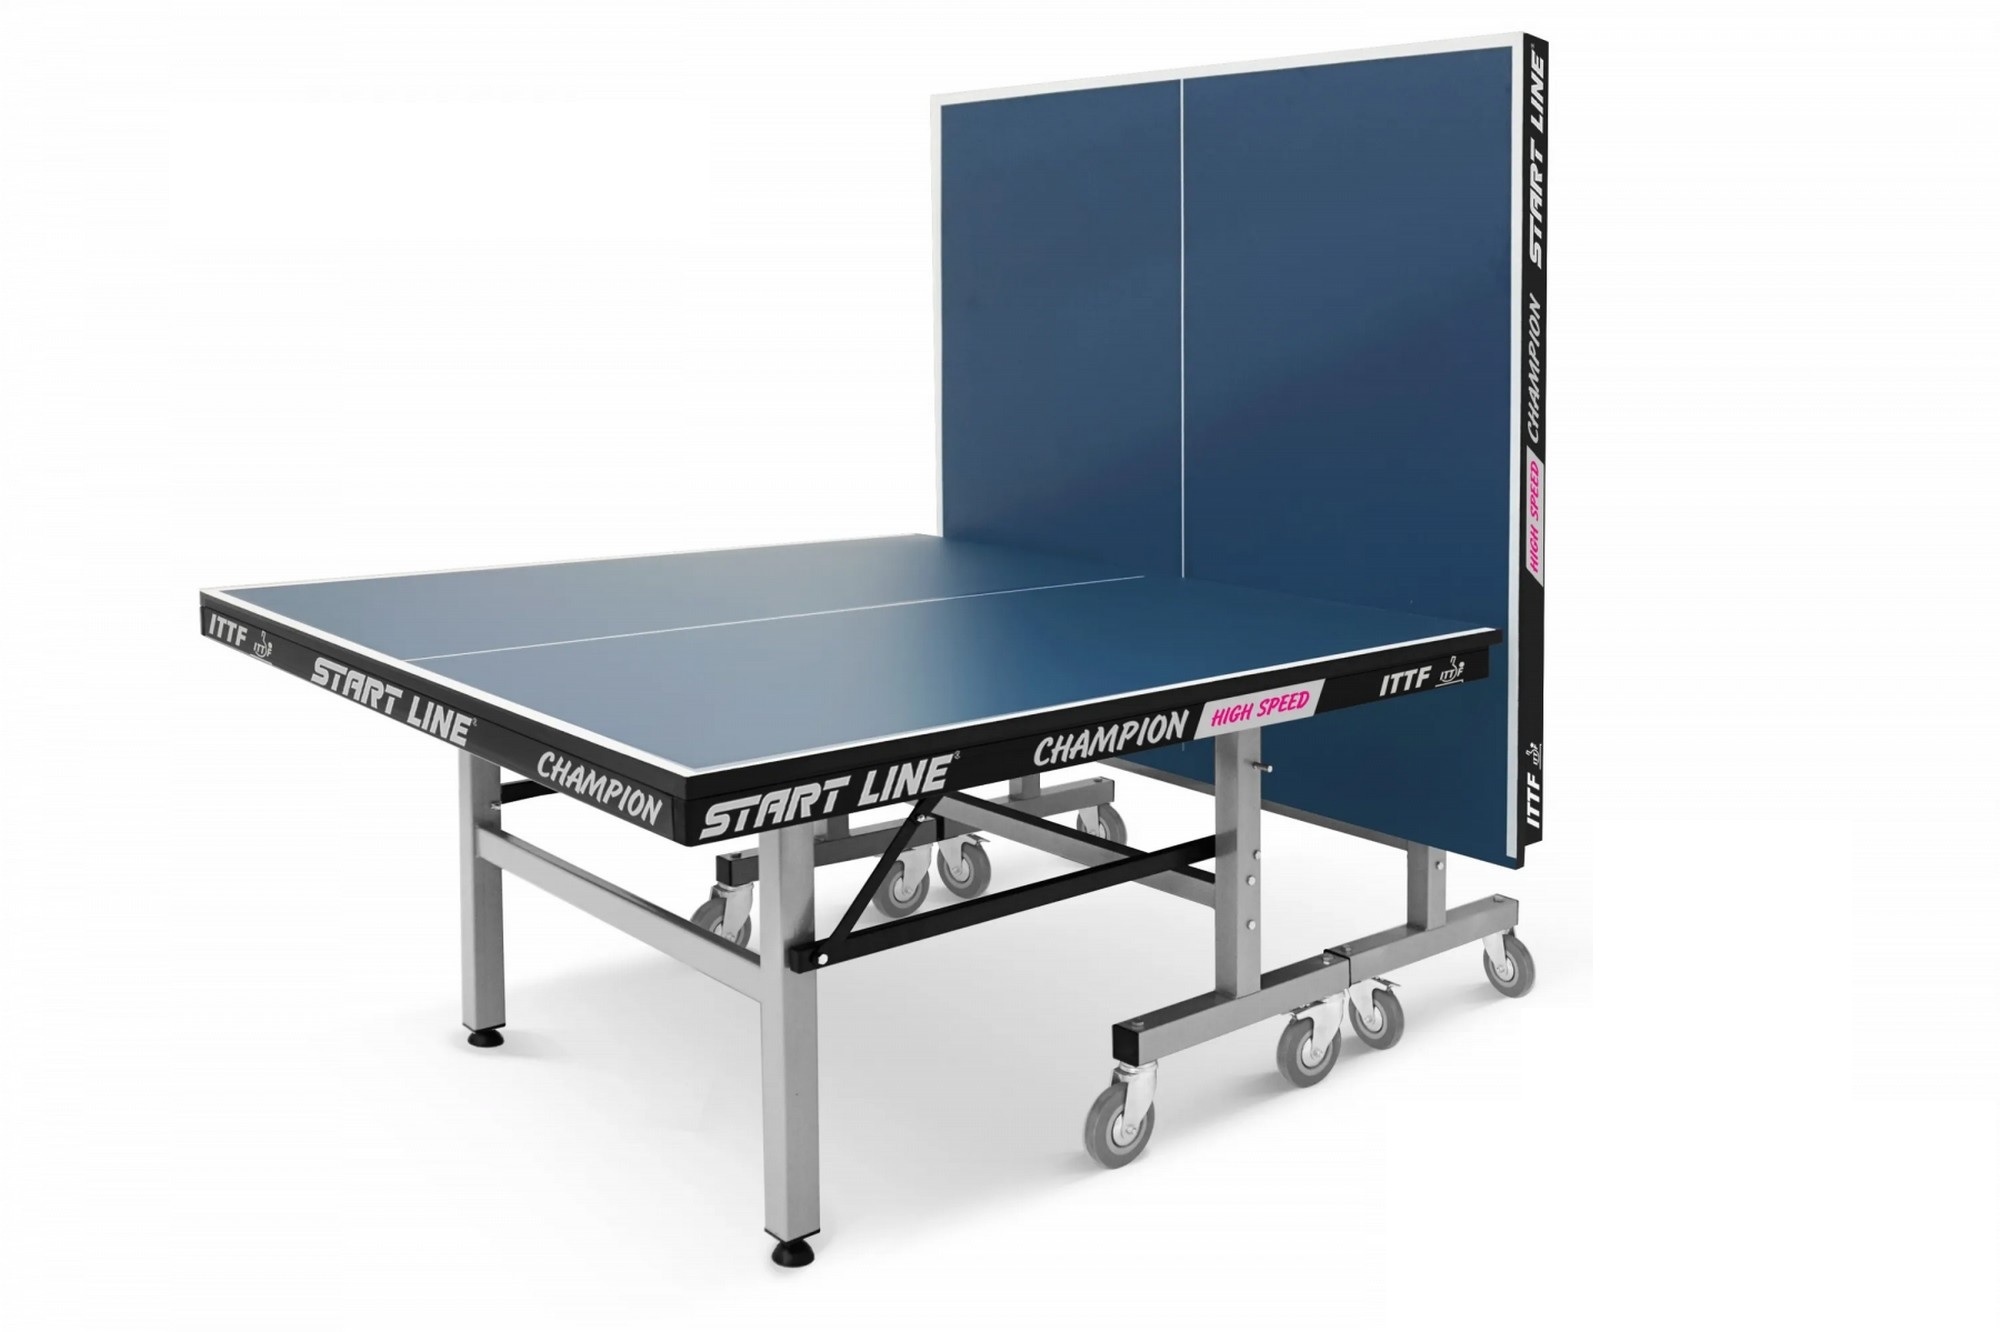 Теннисный стол Start Line Champion HIGH SPEED 60-888 2000_1332